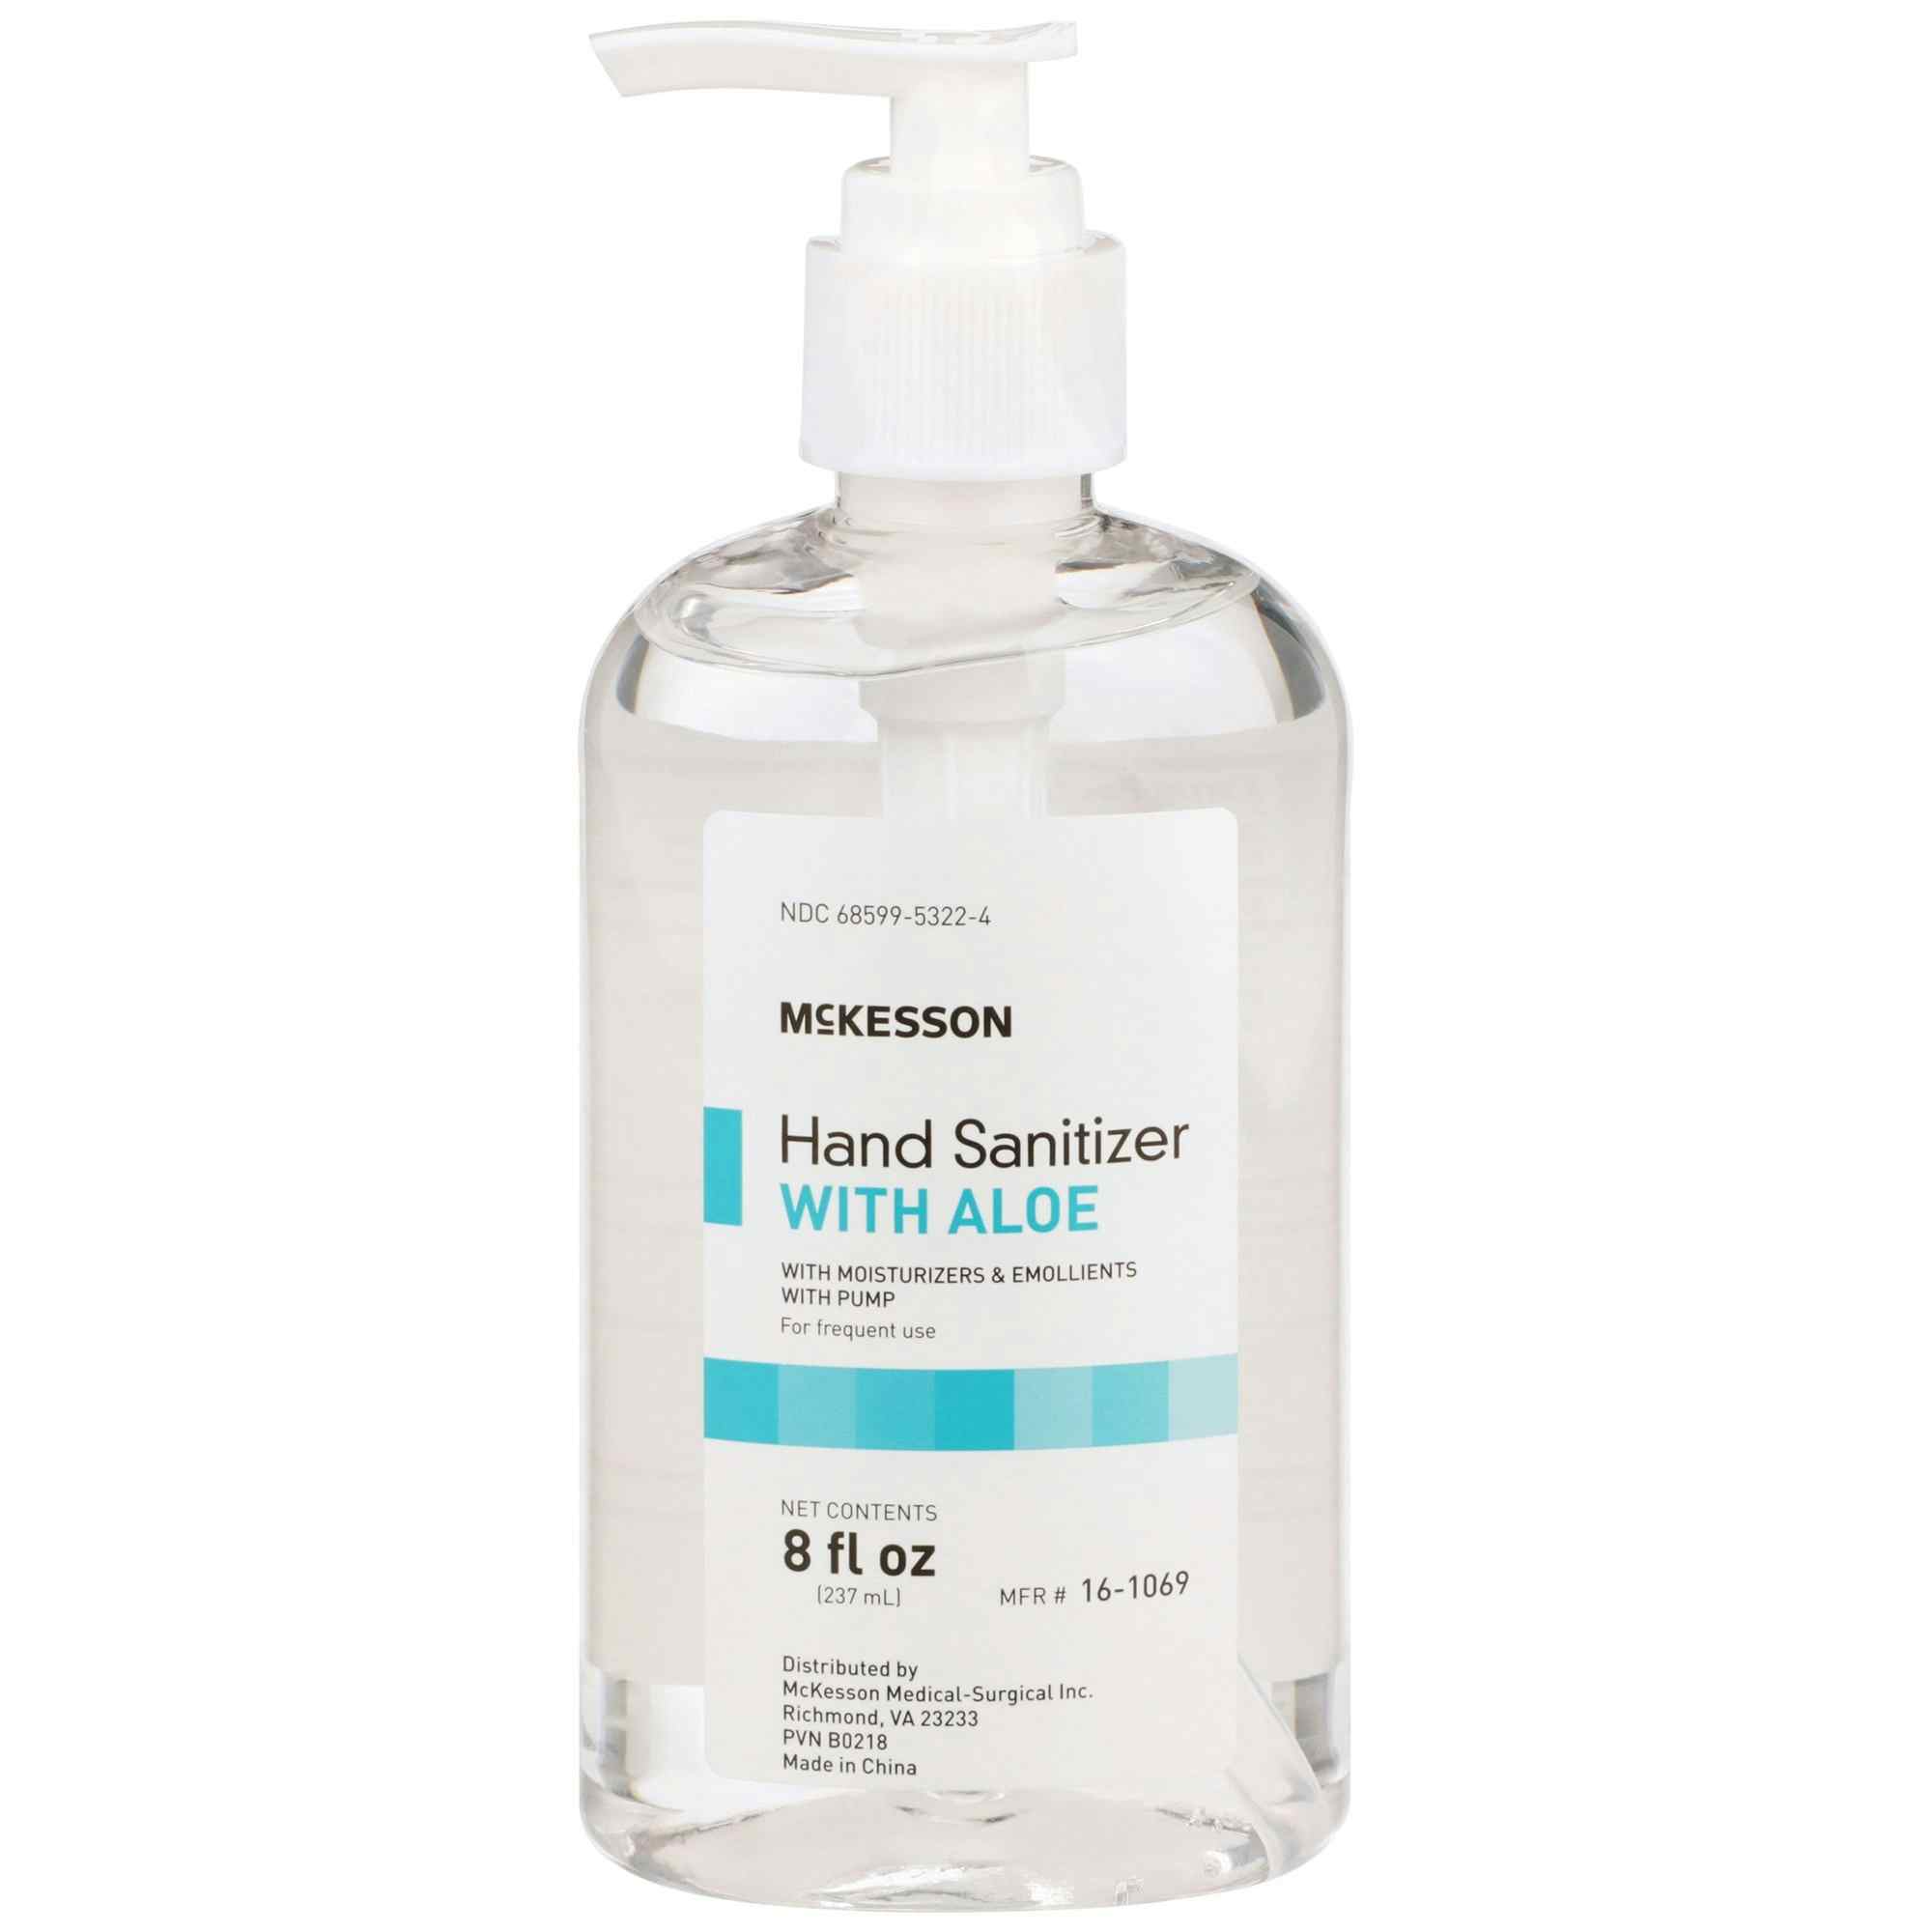 McKesson Hand Sanitizer with Aloe, 16-1069, 8 oz. - Case of 24